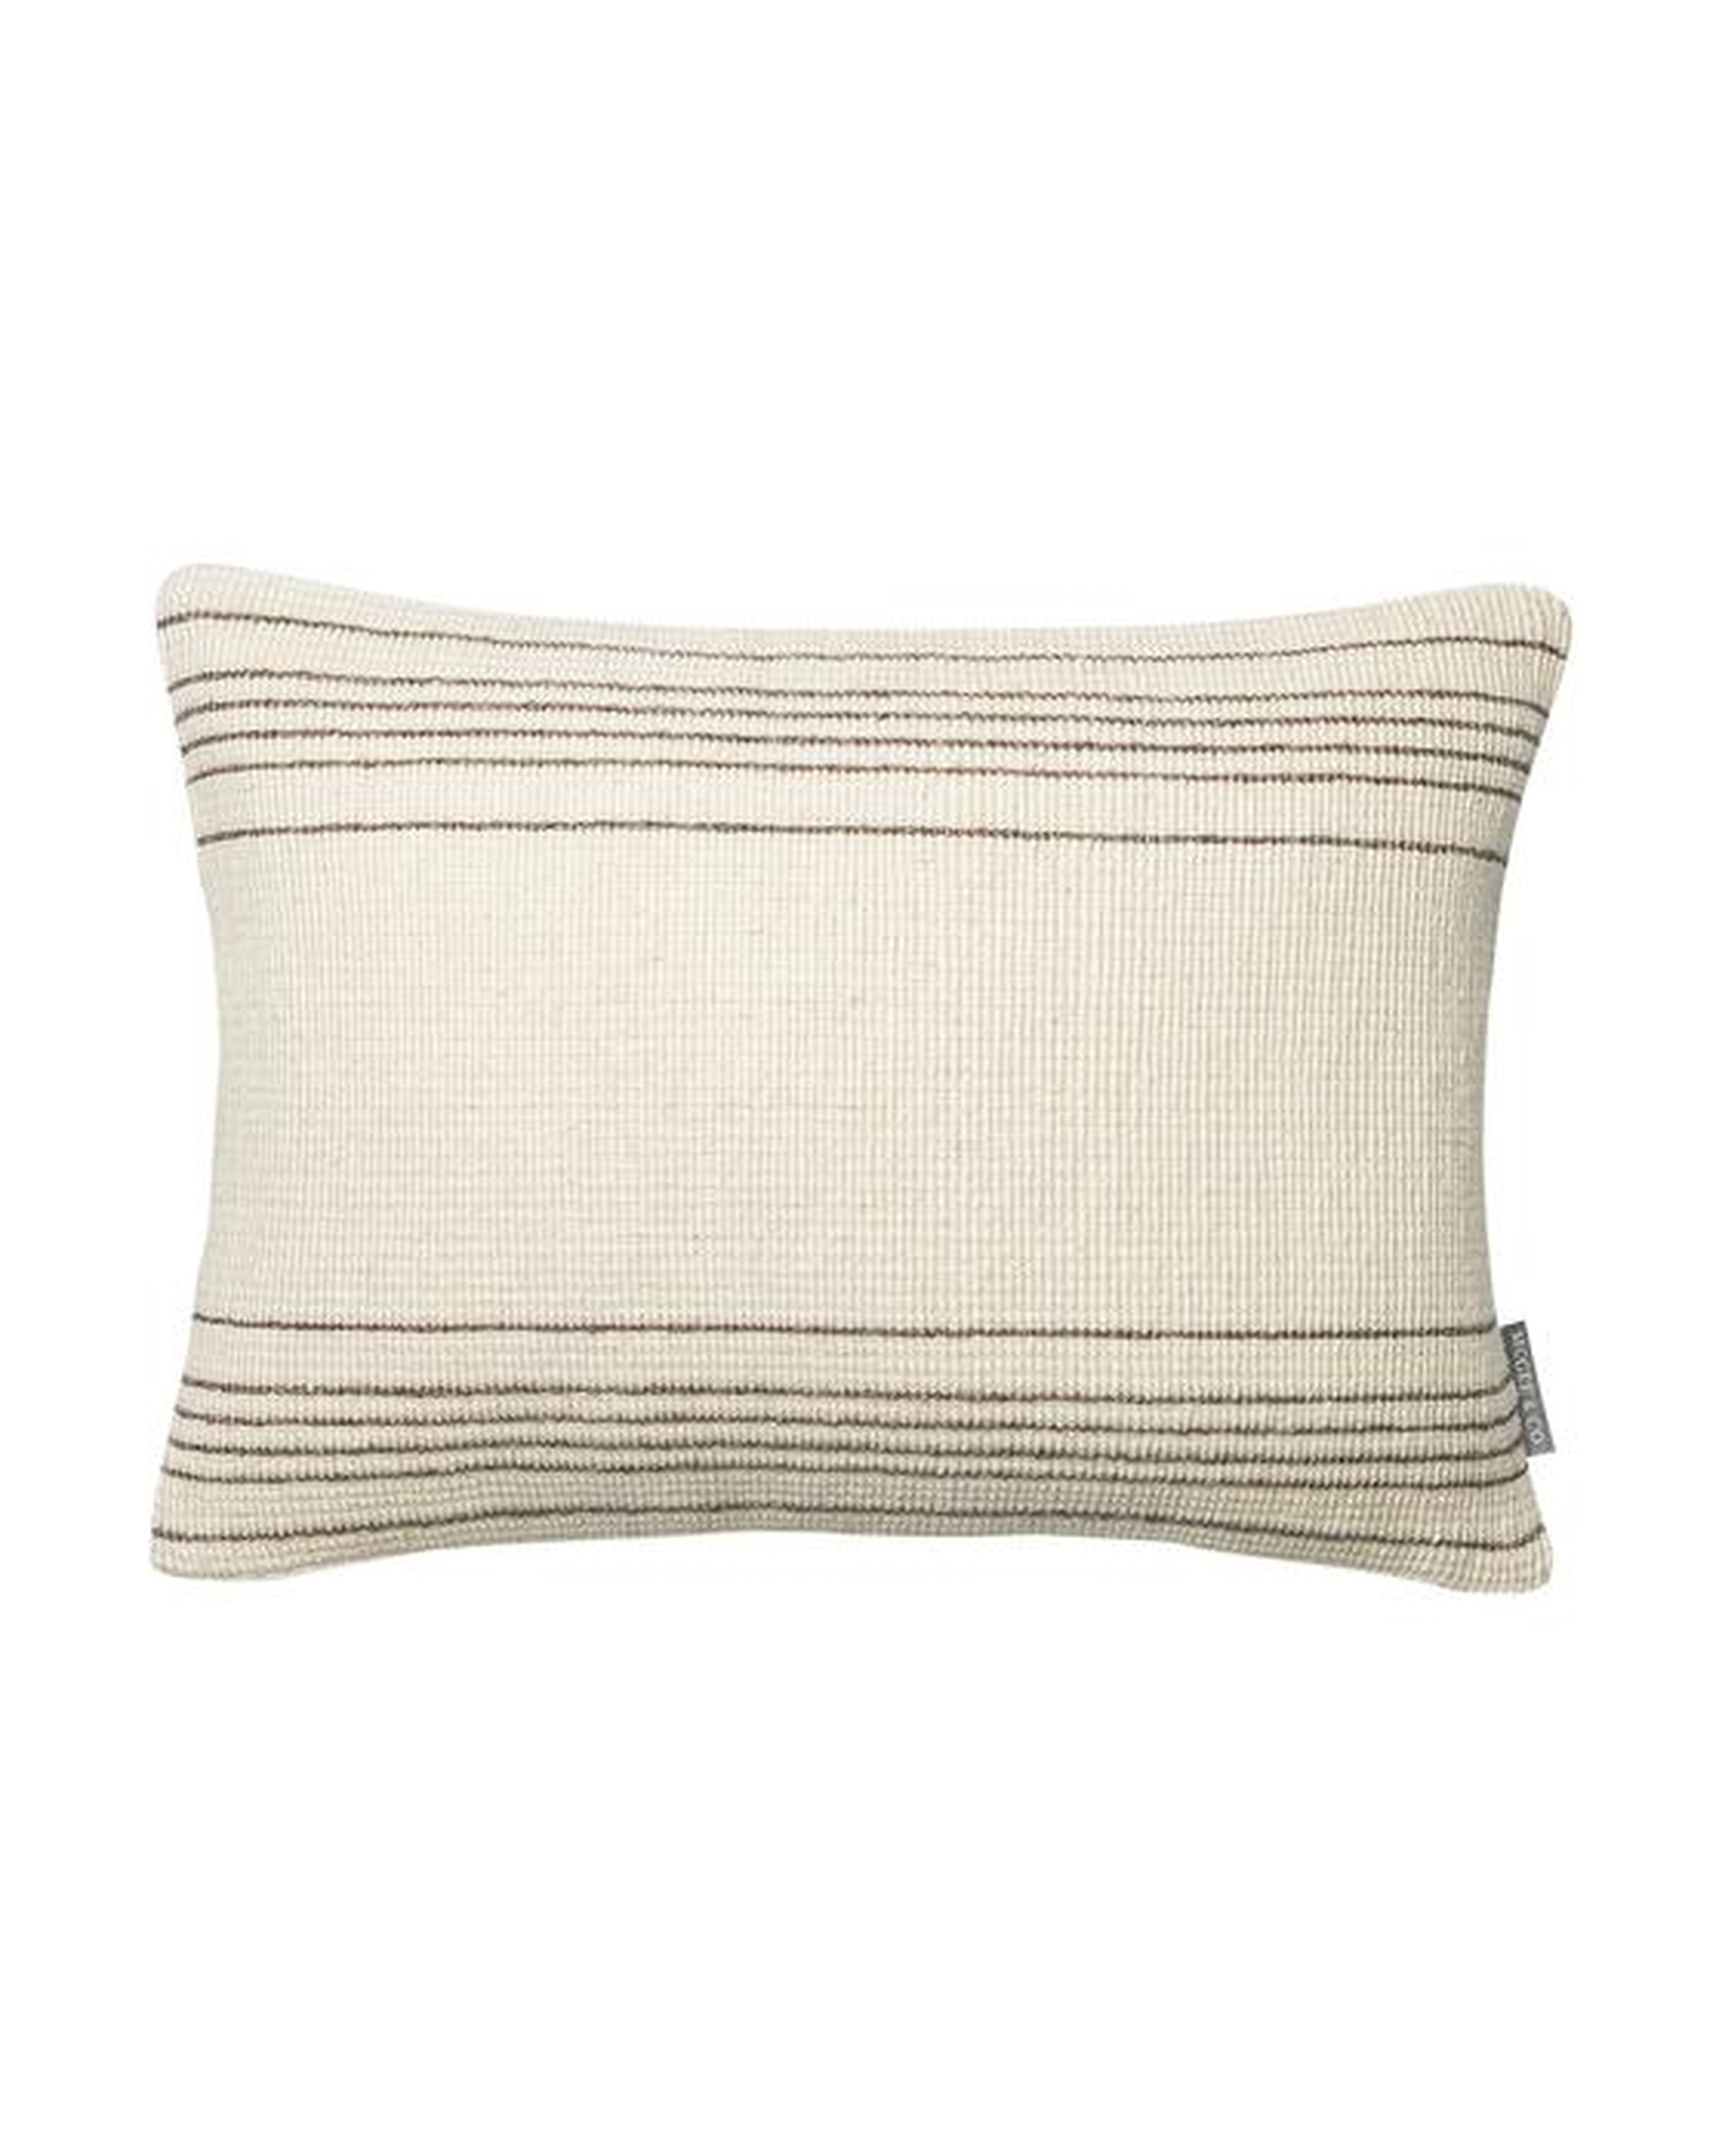 NO LONGER AVAILABLE Caspian Woven Pillow Cover, 20" x 14" - McGee & Co.